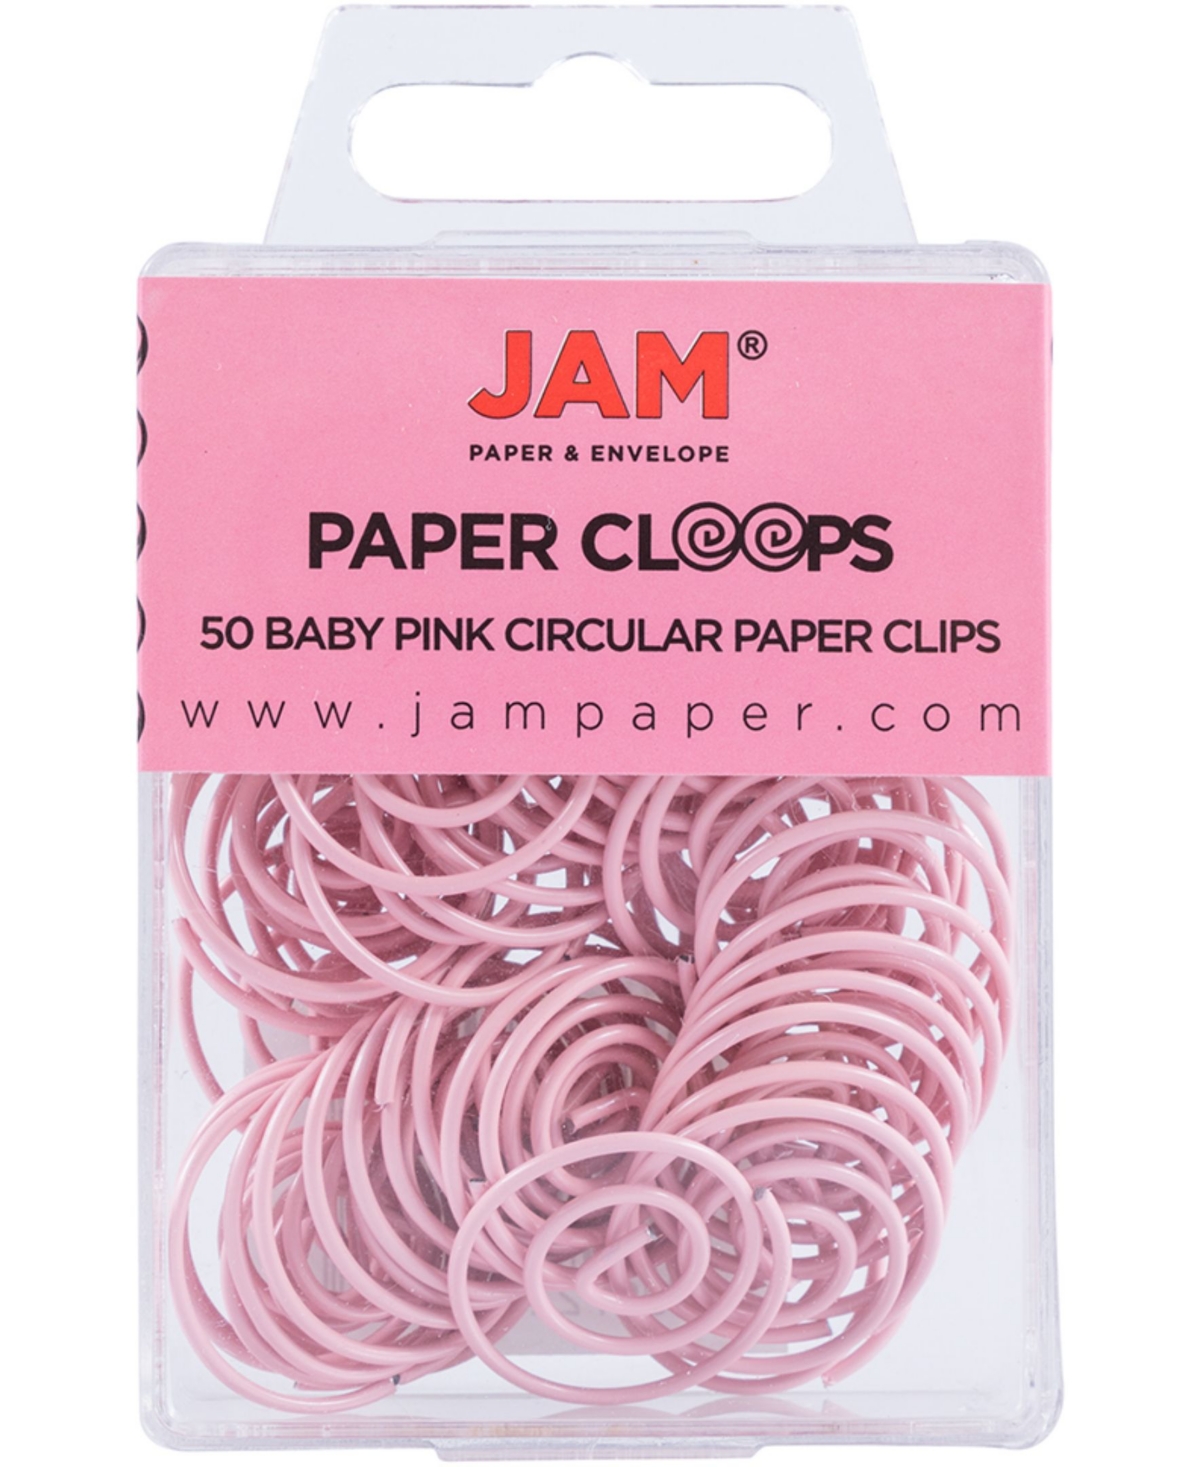 Jam Paper Circular Paper Clips In Baby Pink